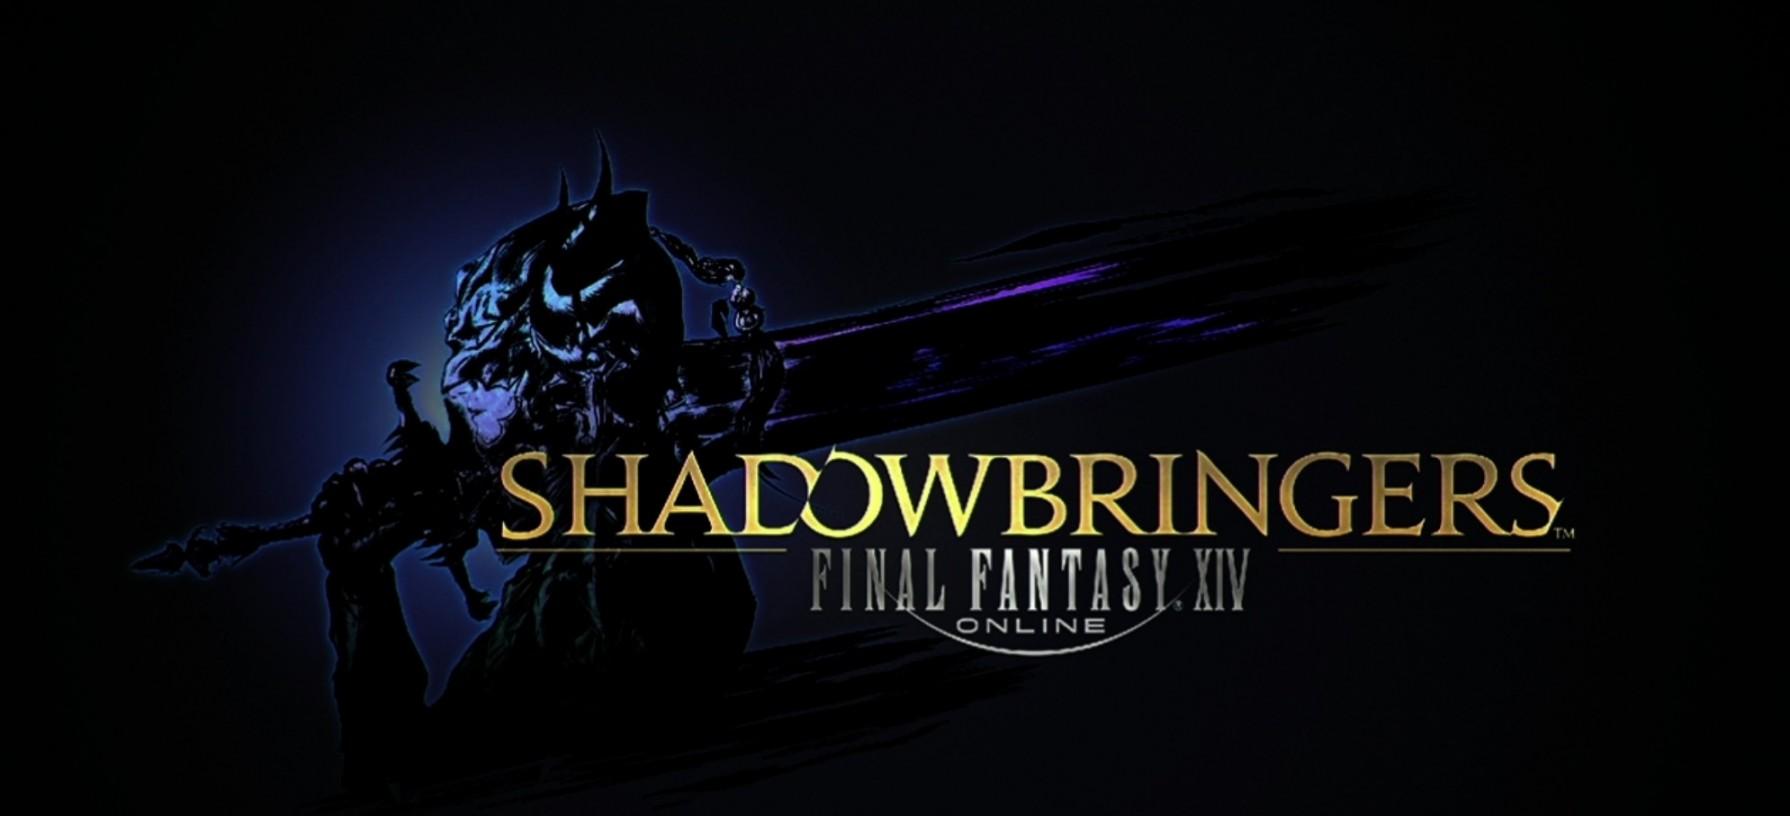 final fantasy xiv shadow bringers wallpapers wallpaper cave final fantasy xiv shadow bringers